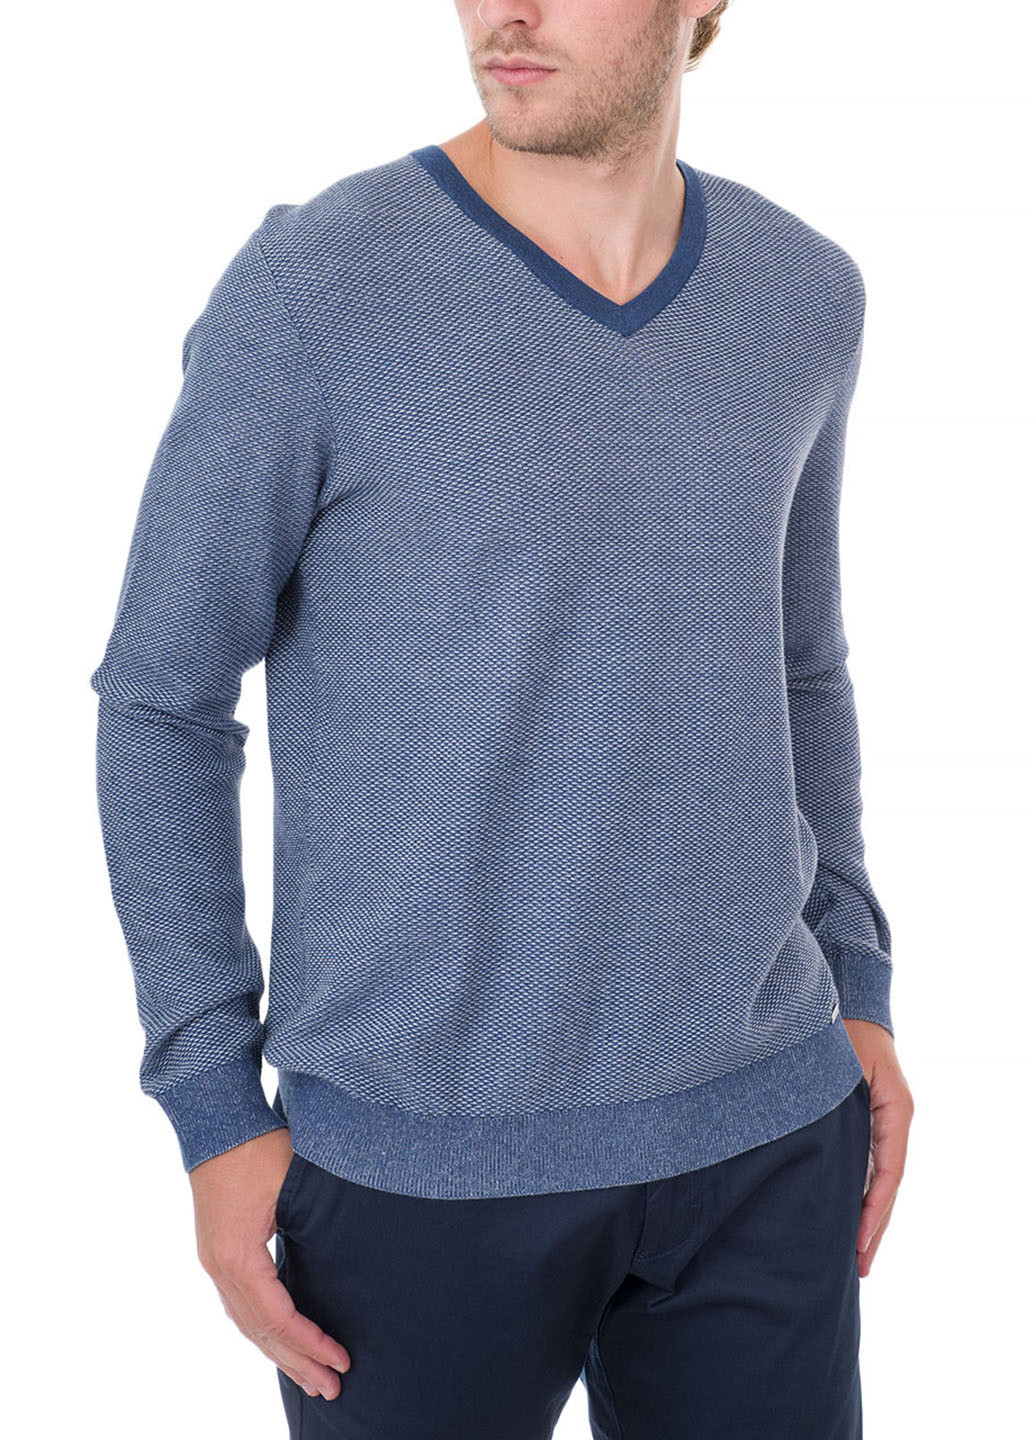 Синий демисезонный пуловер пуловер Olymp